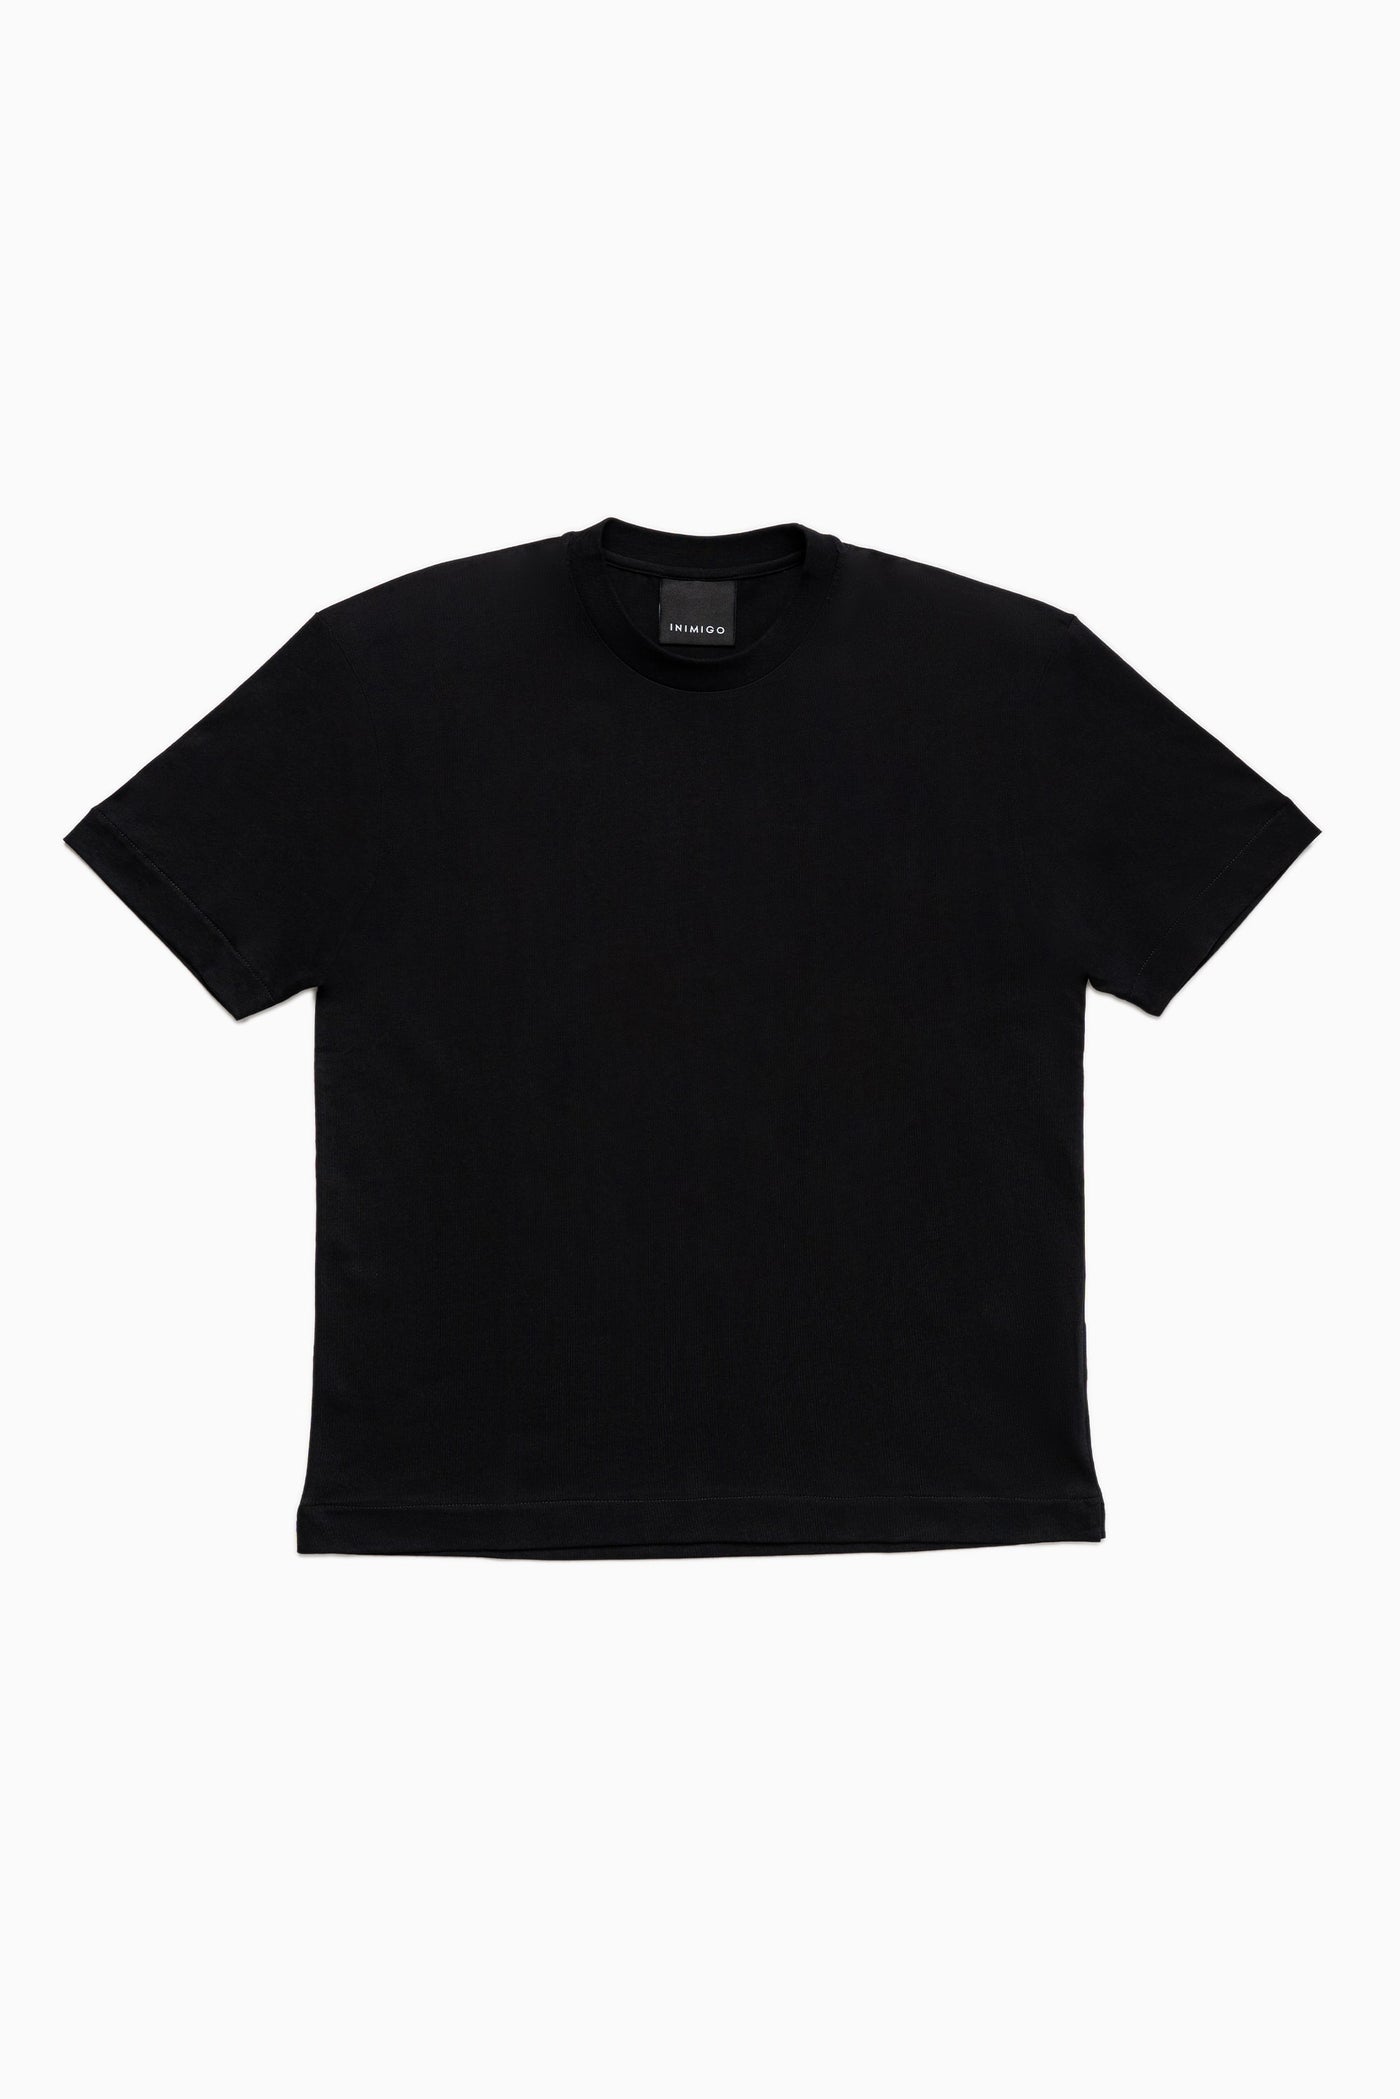 Heart Patch Comfort Dark Black T-shirt